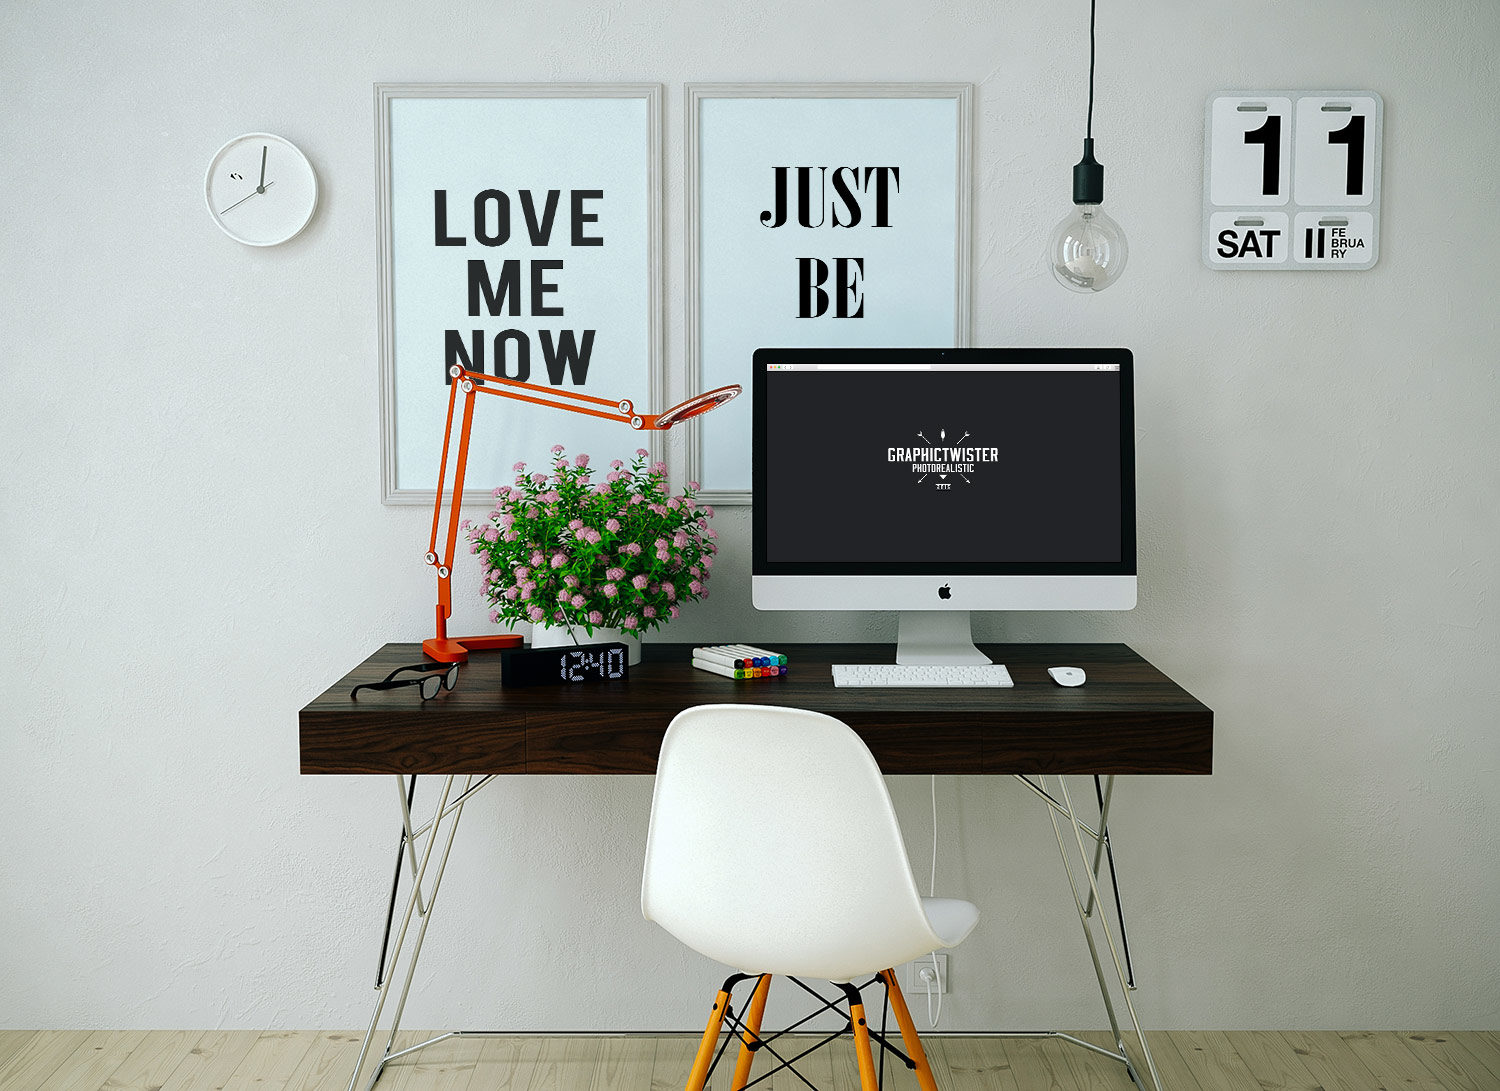 Download Workspace iMac and 2 Wall Frames - Free PSD Mockup | Free Mockup